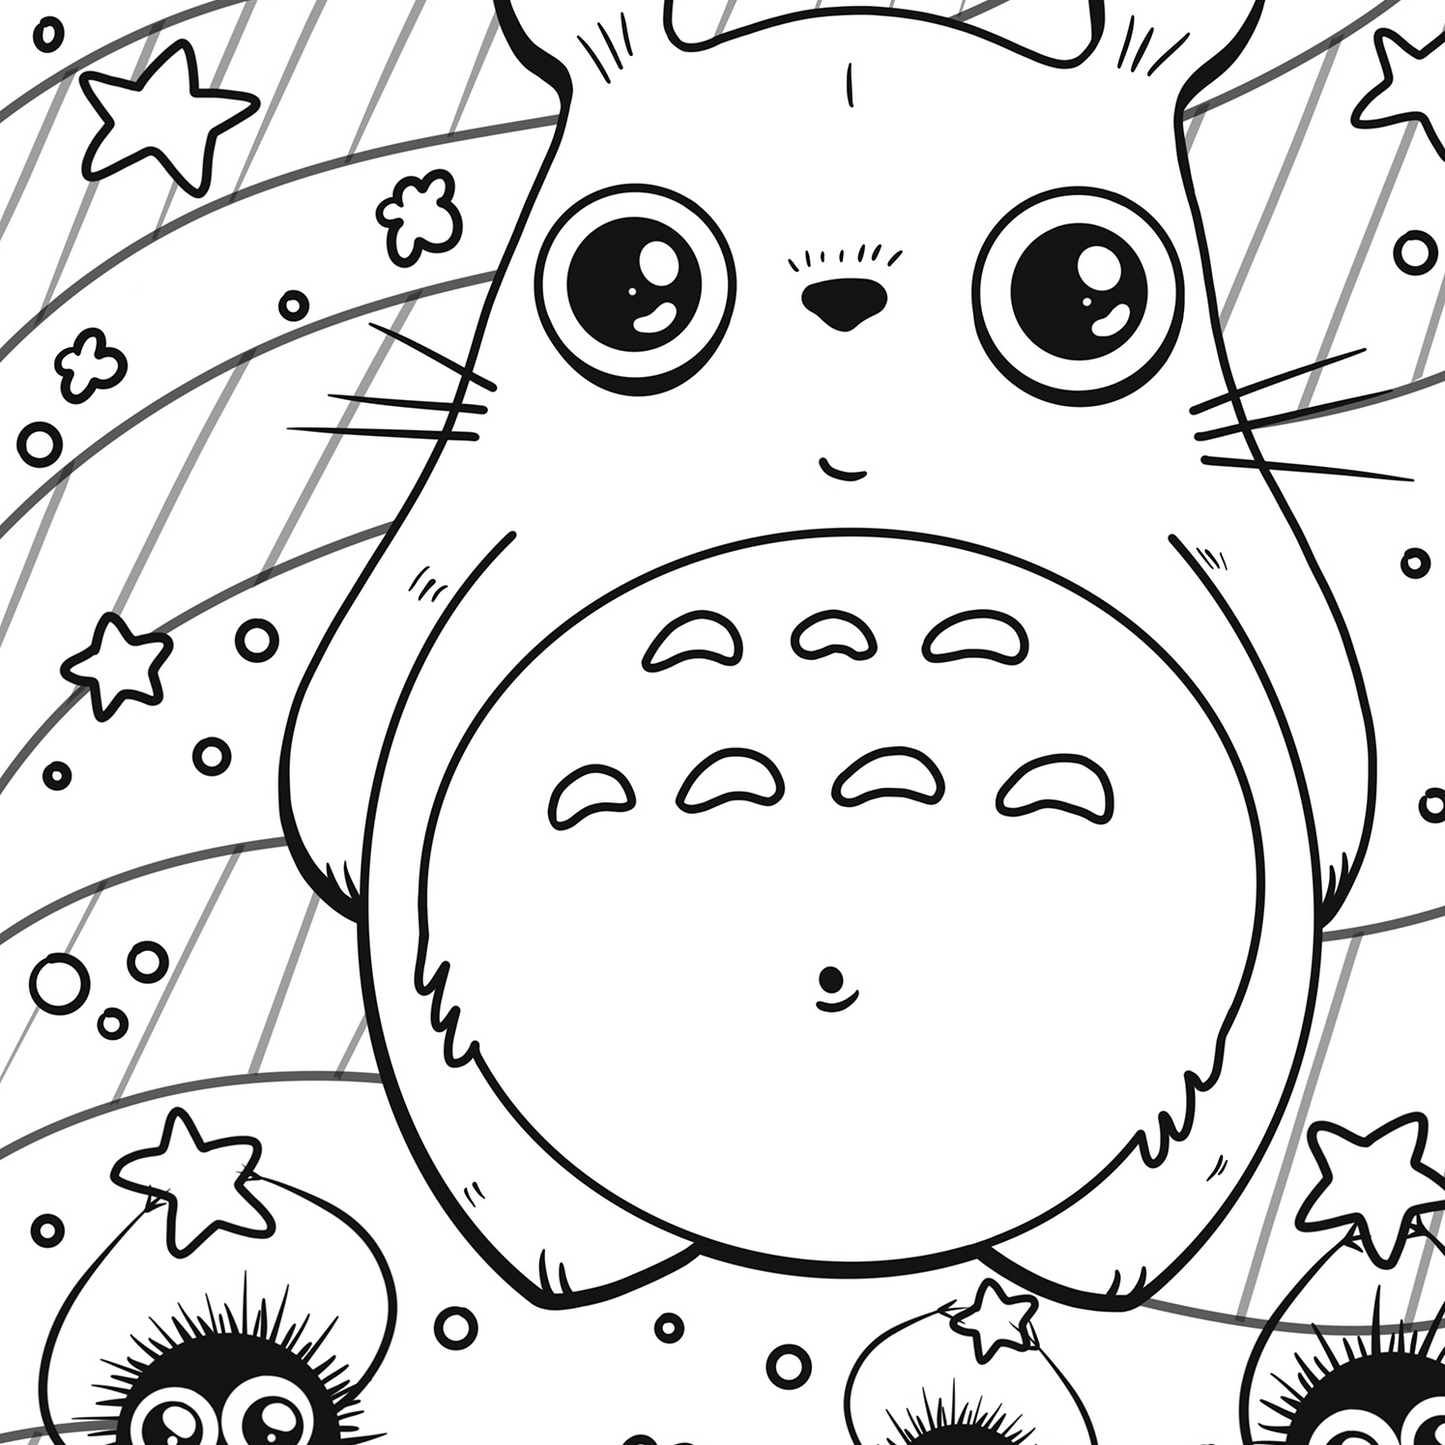 Totoro + Soot Sprites Coloring Page (Digital Download)